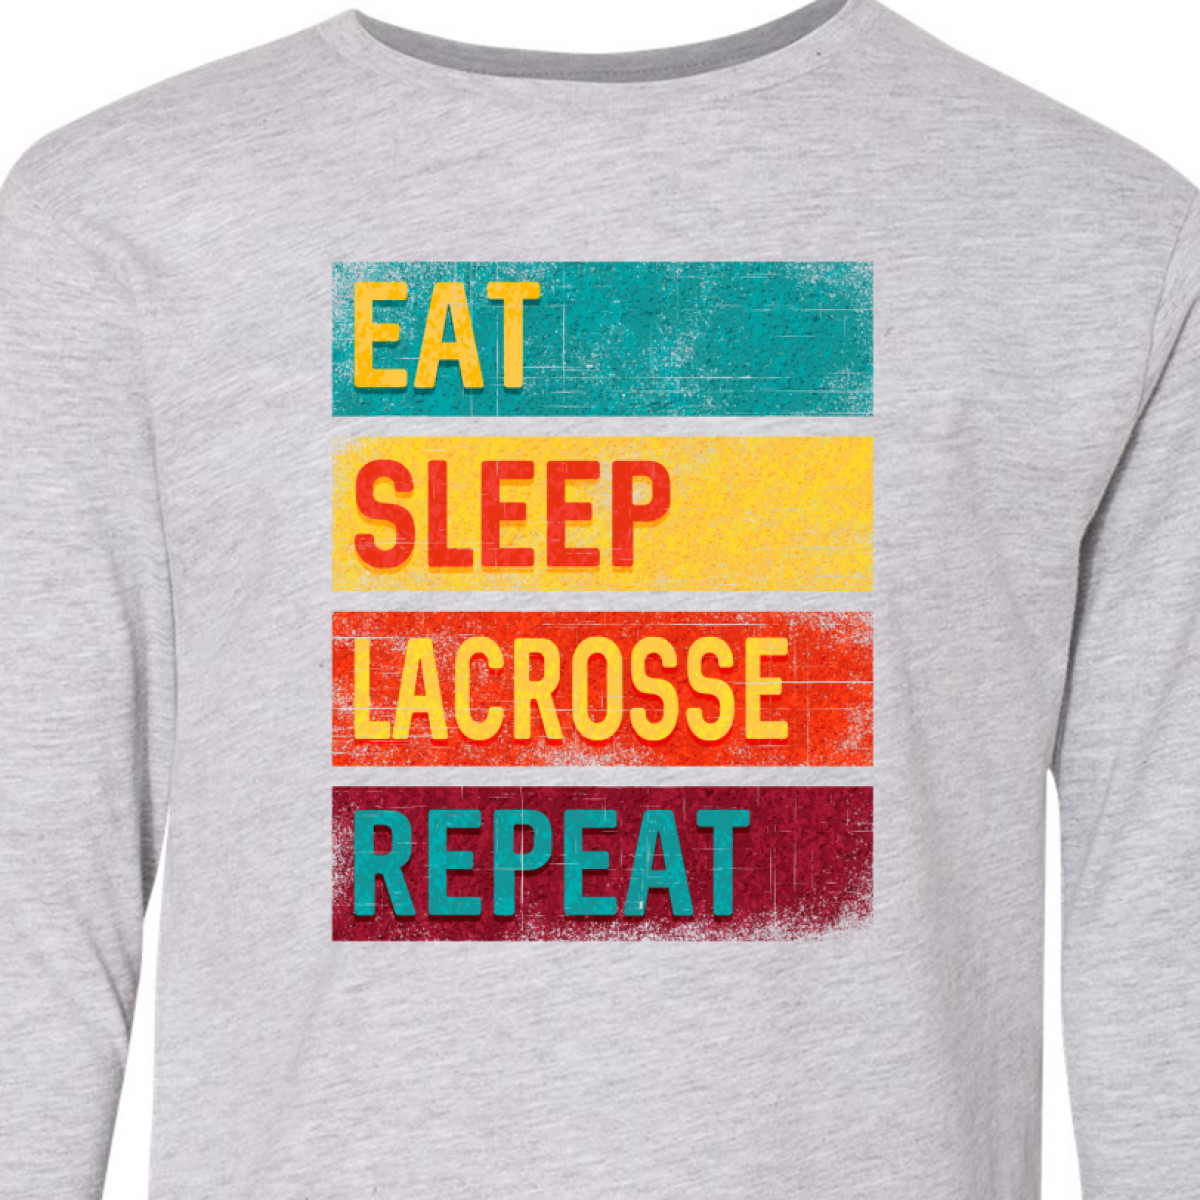 Inktastic Lacrosse Player Eat Sleep Lacrosse Repeat Long Sleeve Youth T-Shirt - image 3 of 4